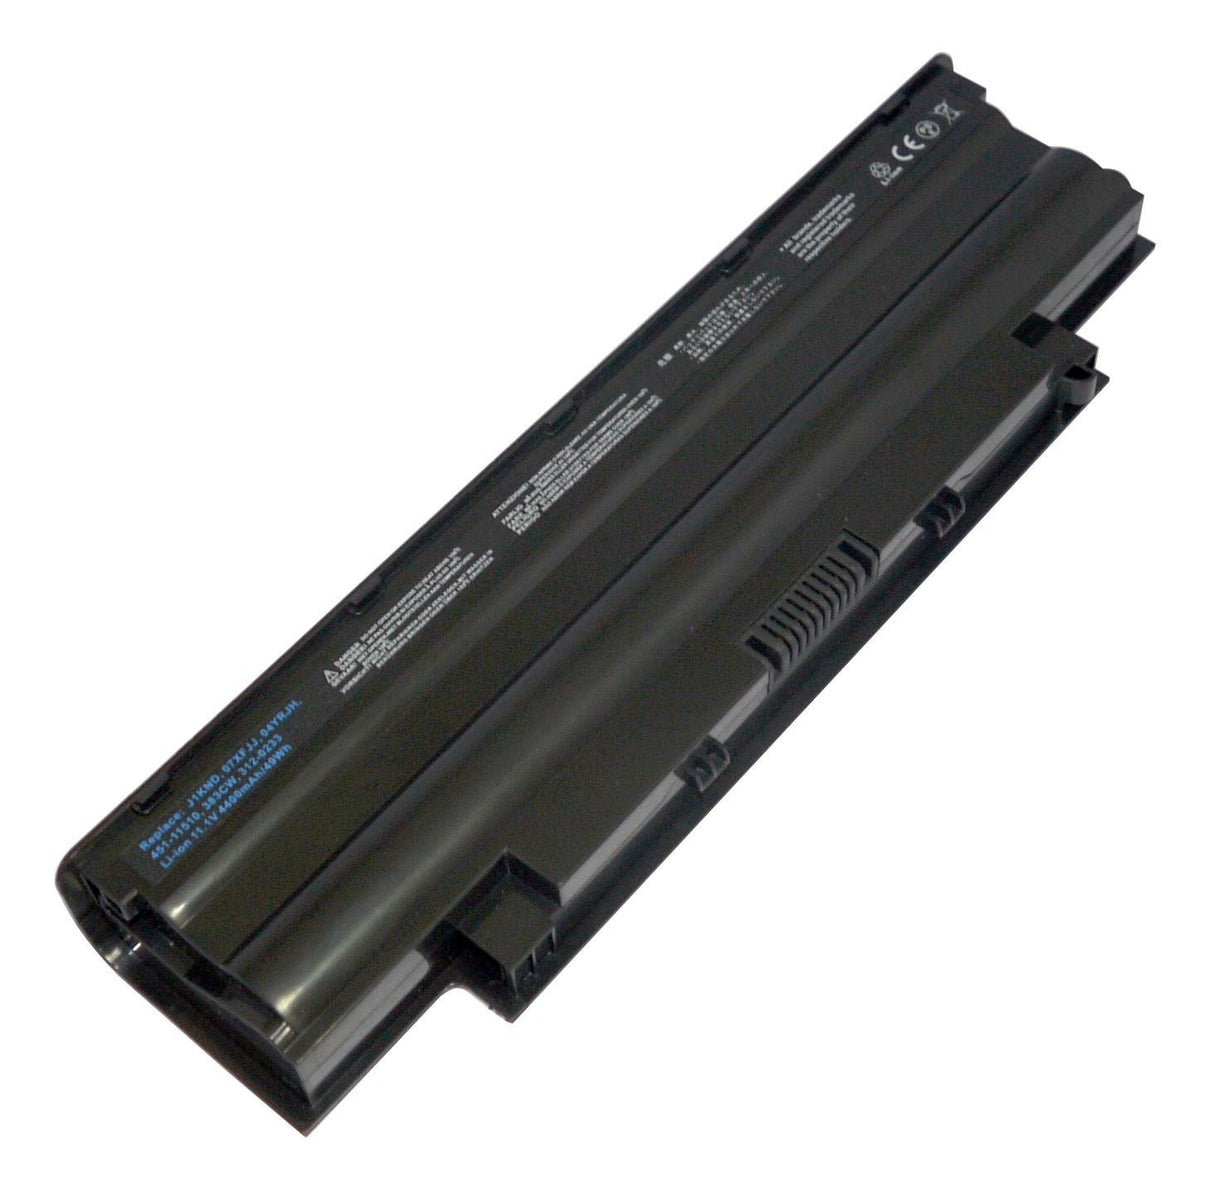 Bateria Compatível para Dell Inspiron 13R 14R 15R 17R 04YRJH 06P6PN 312-0233 5200mAh - Multi4you®